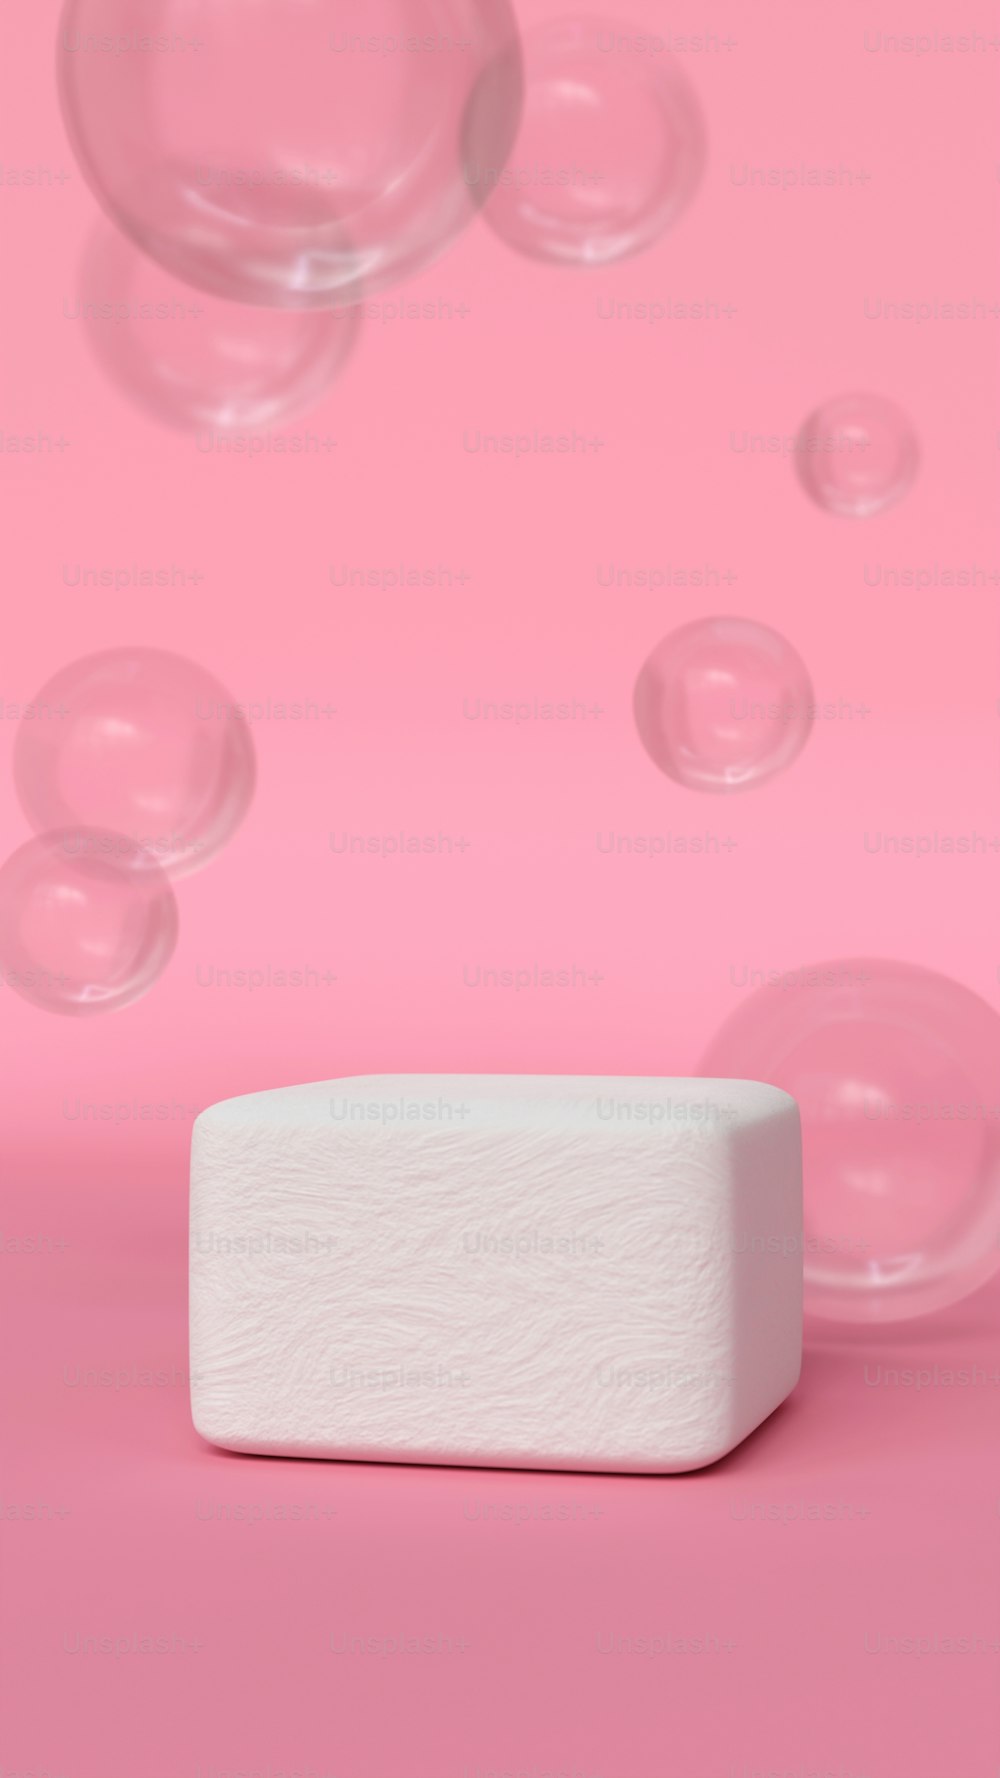 una barra de jabón sobre una superficie rosada